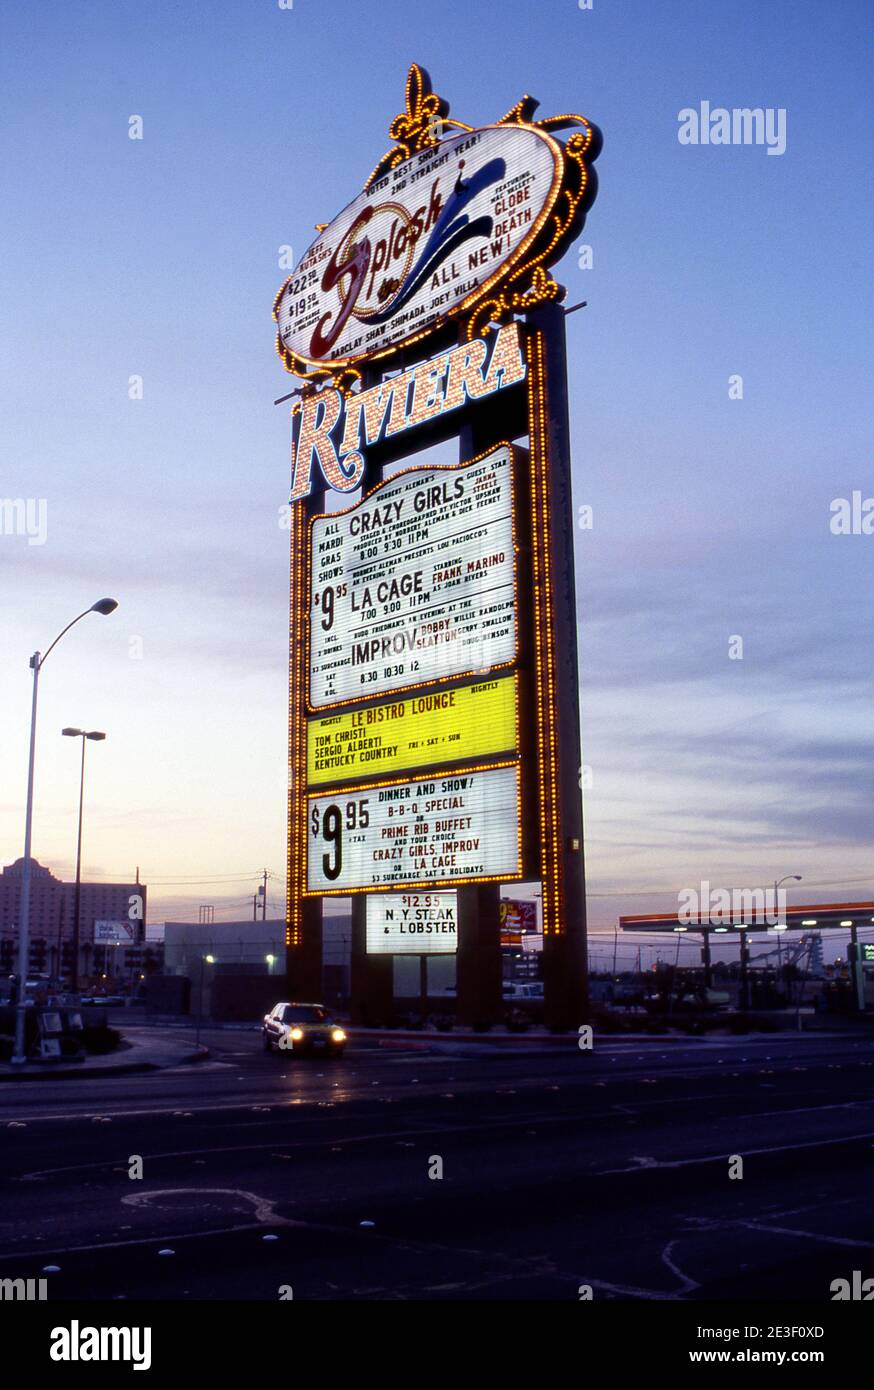 Las Vegas , Riviera editorial stock image. Image of gambling - 43916349